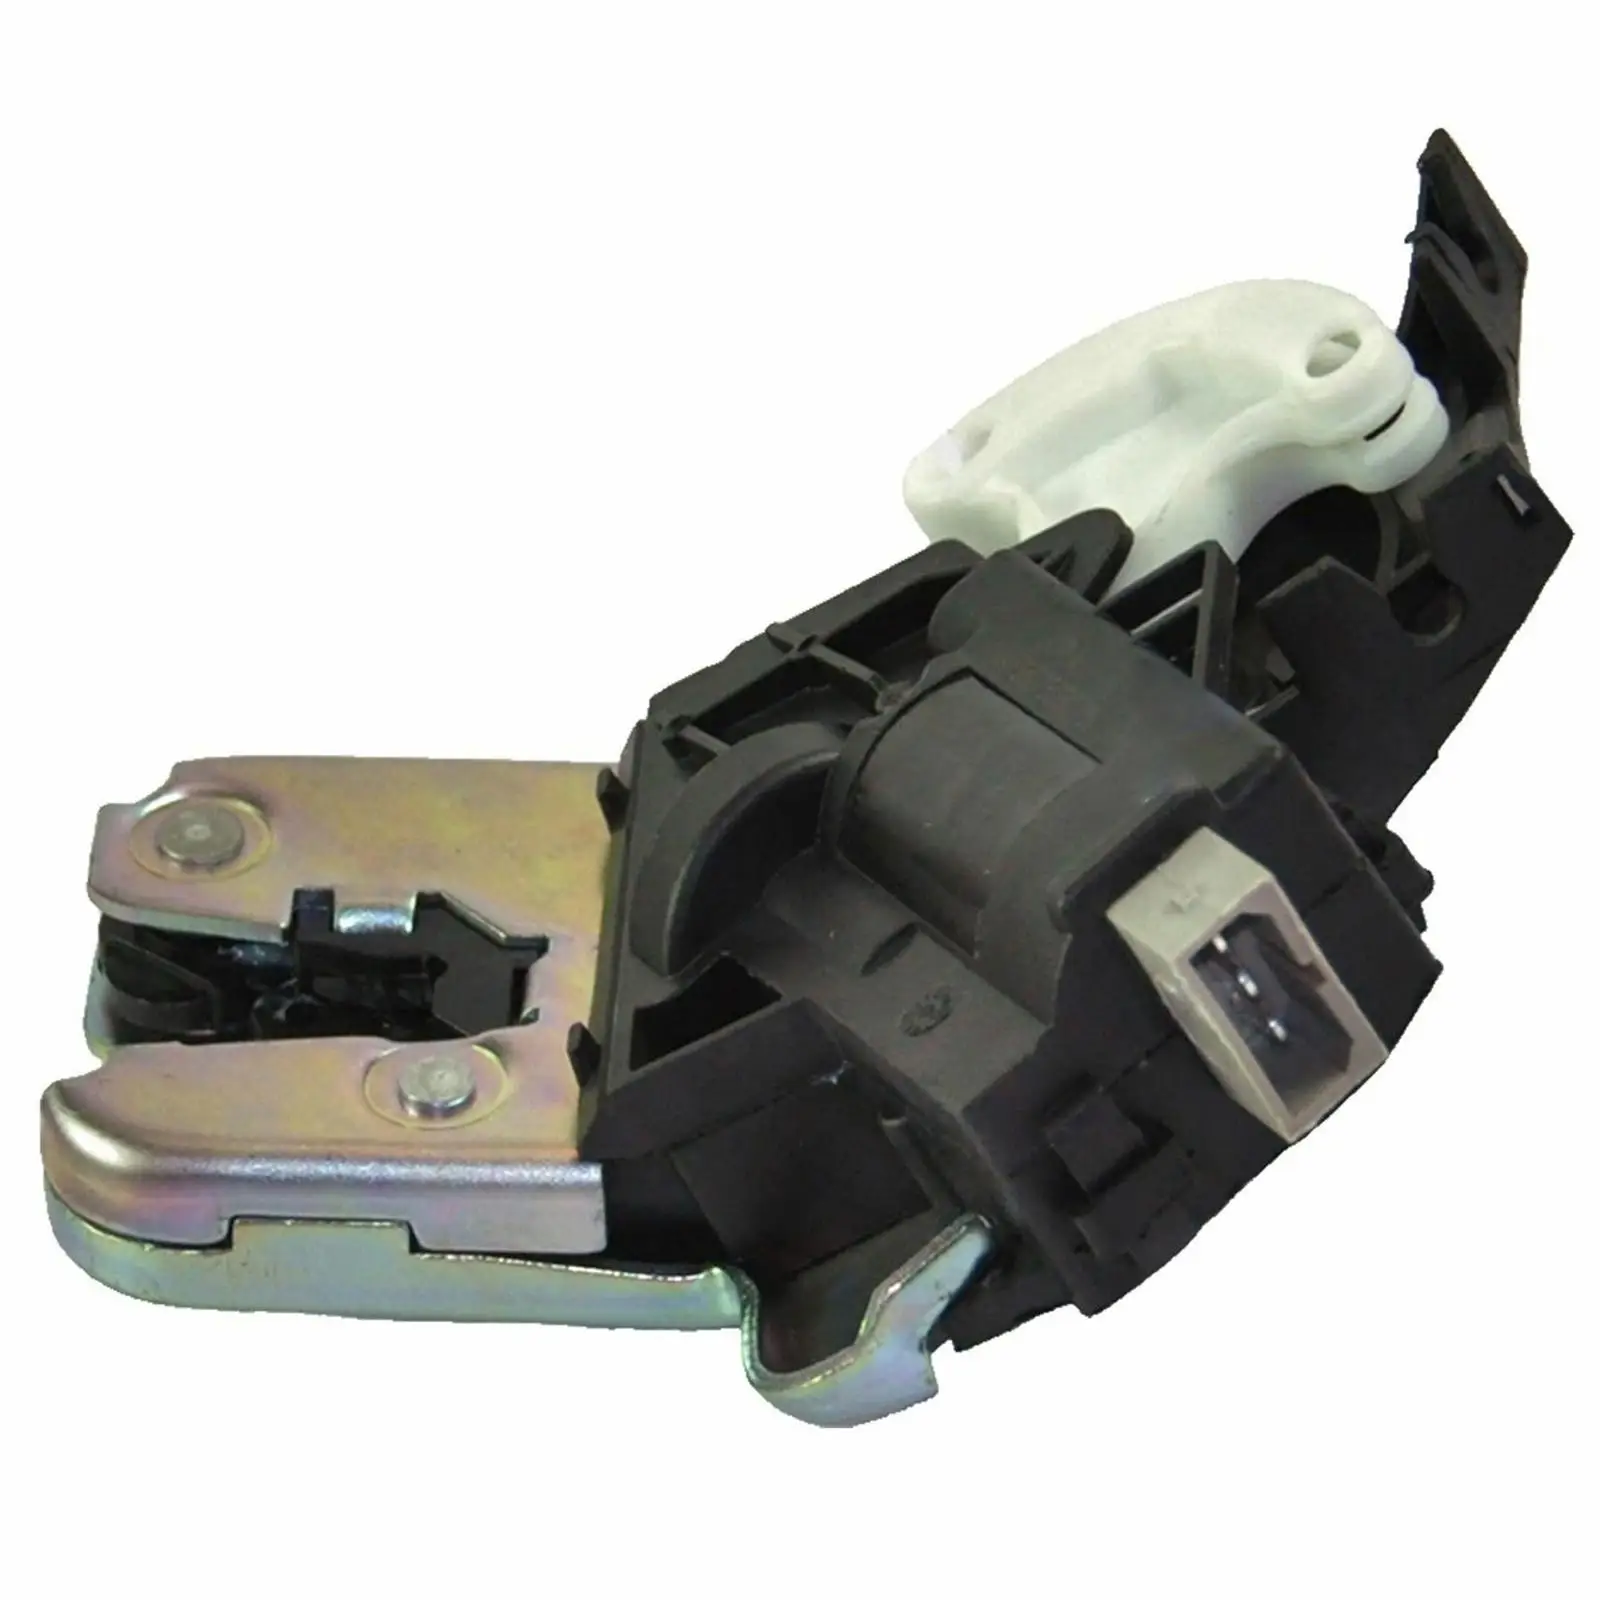 Rear Trunk Boot Lid Lock Latch Actuator Replacement Parts 4F5827505D for VW Golf MK V VI Passat Jetta cc Car Accessories